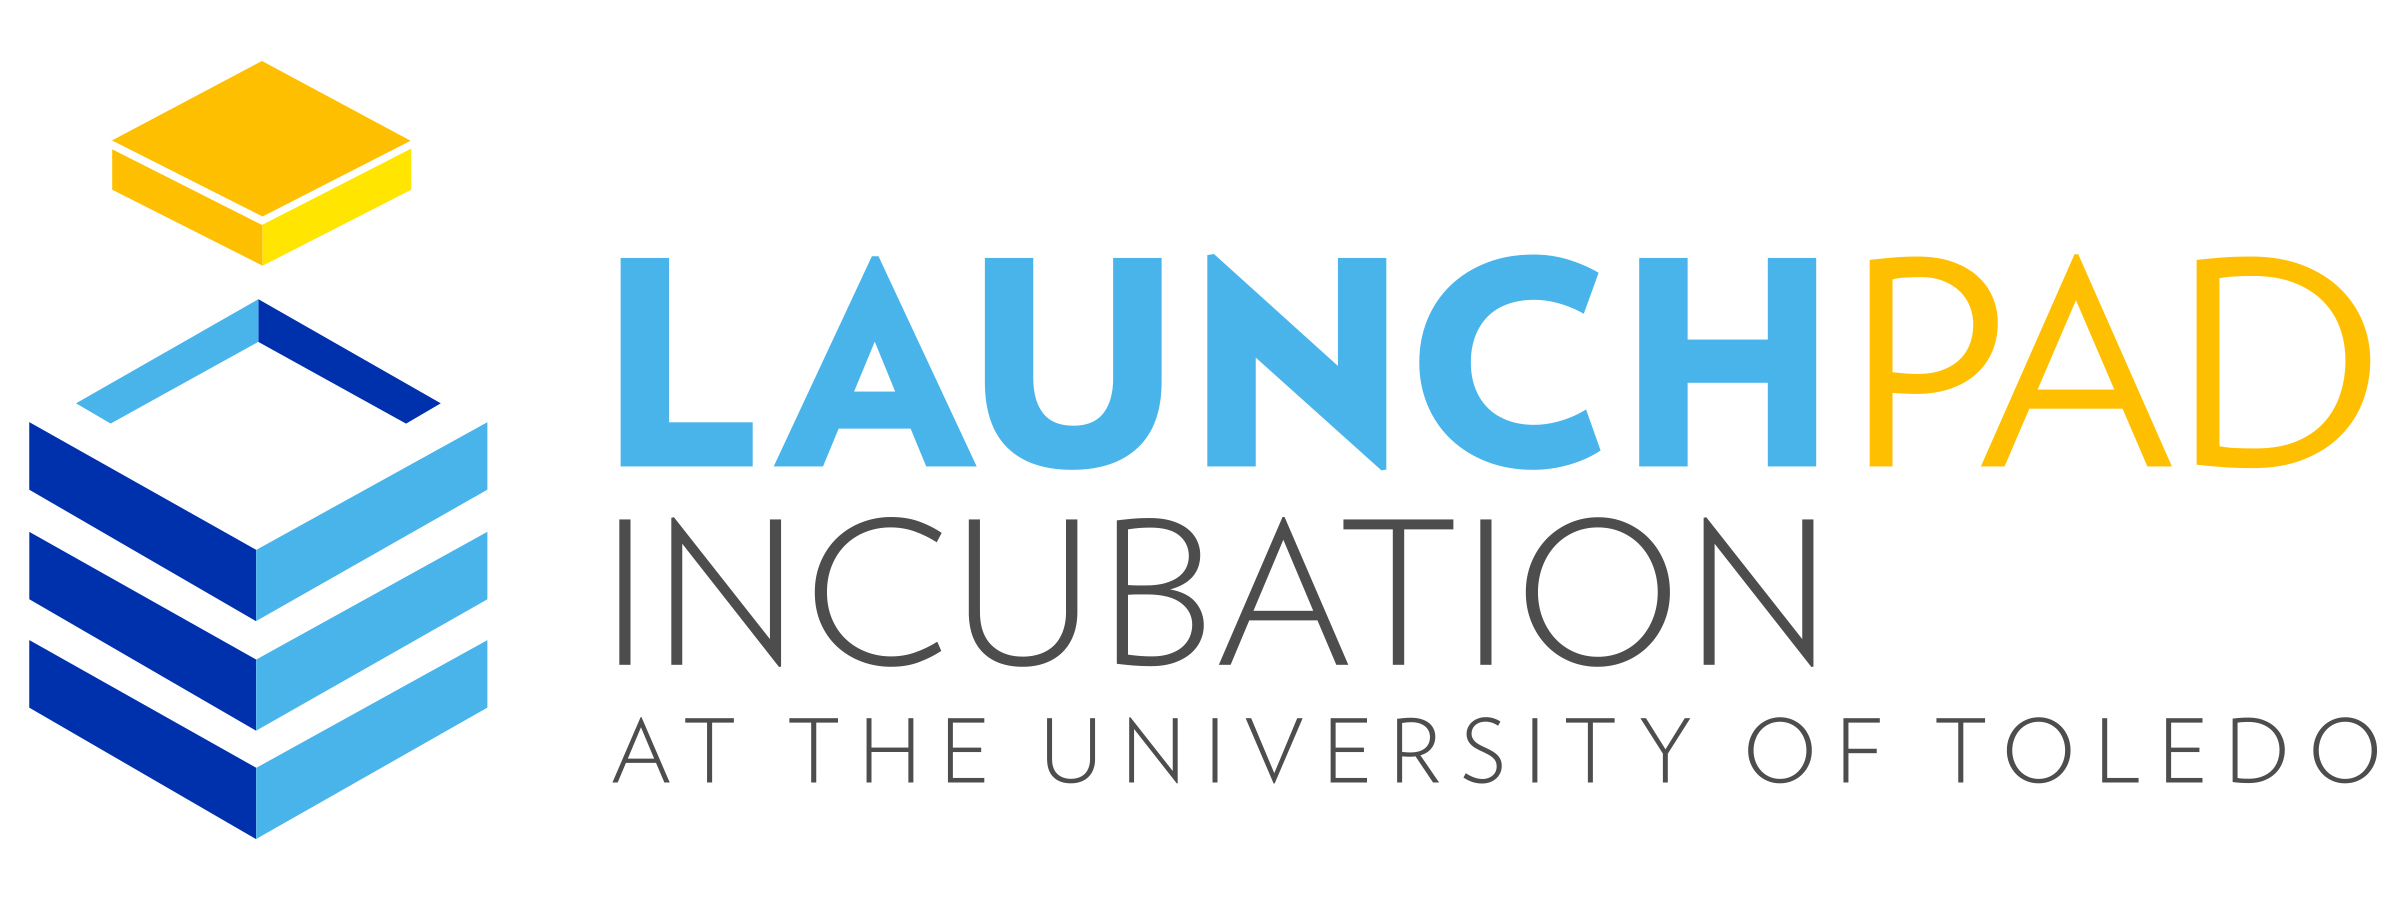 Launchpad Incubation at University of Toledo.jpg